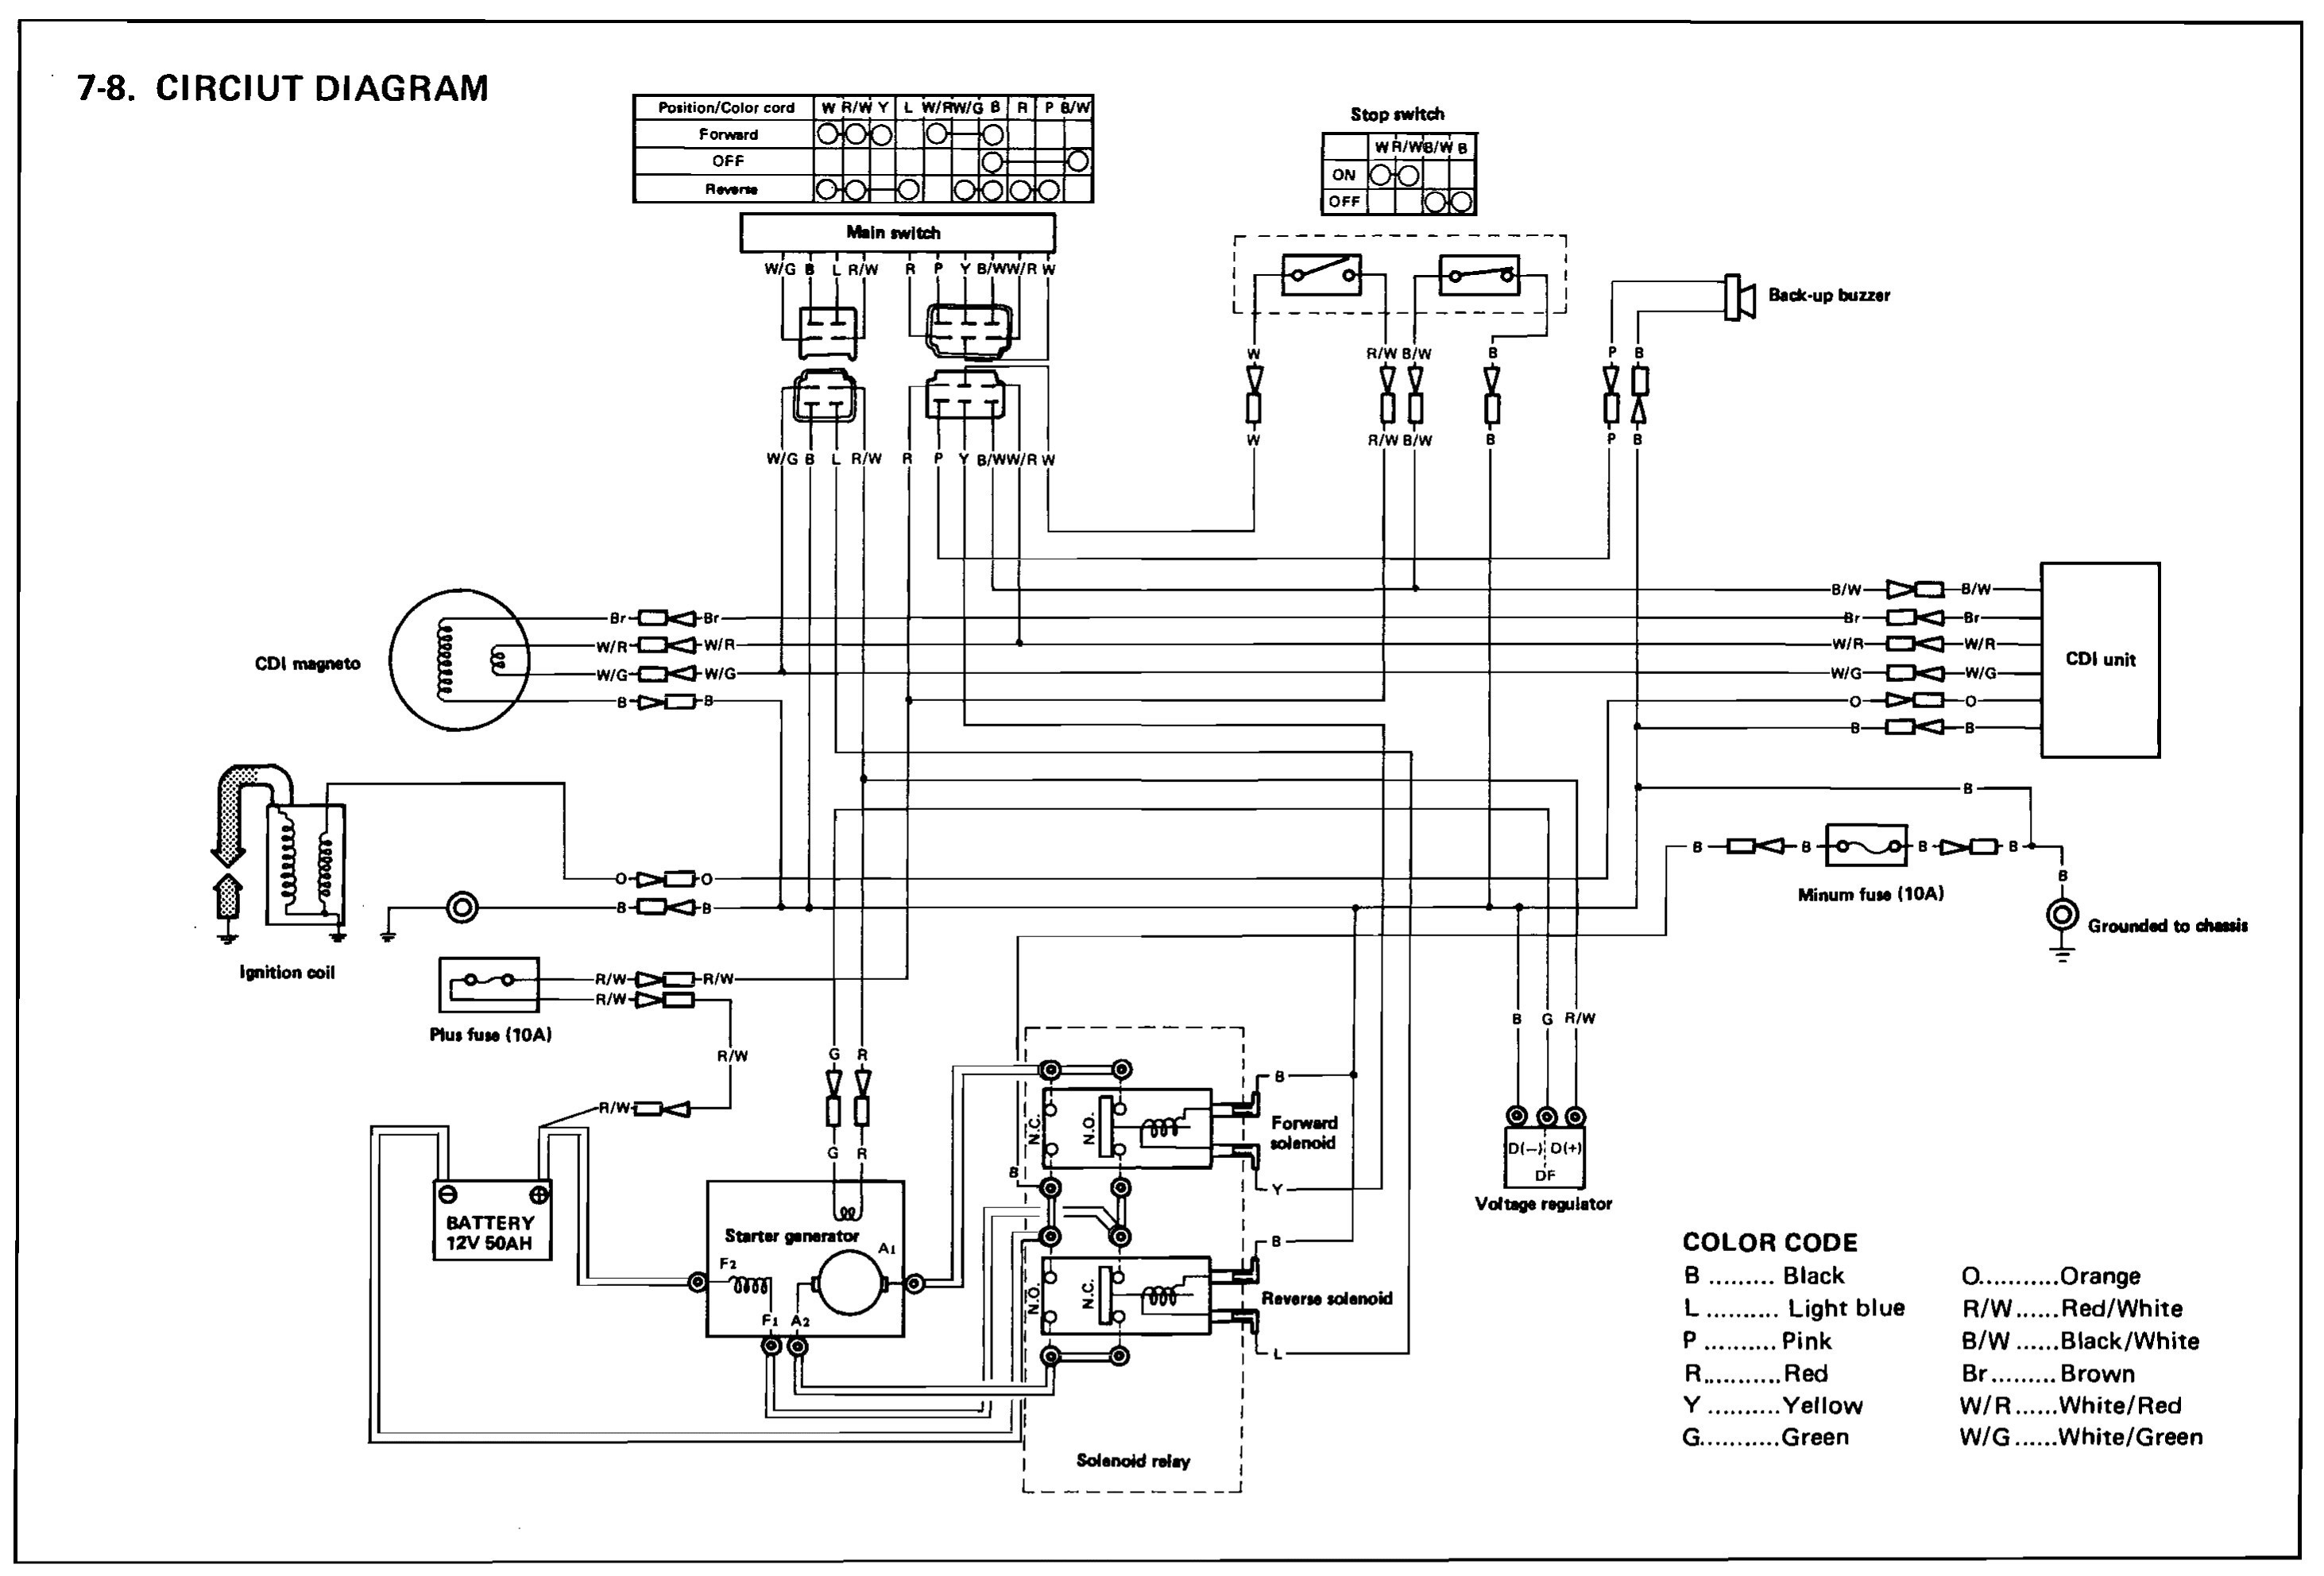 Labeled club car starter generator wiring diagram wiring diagram for club car starter generator